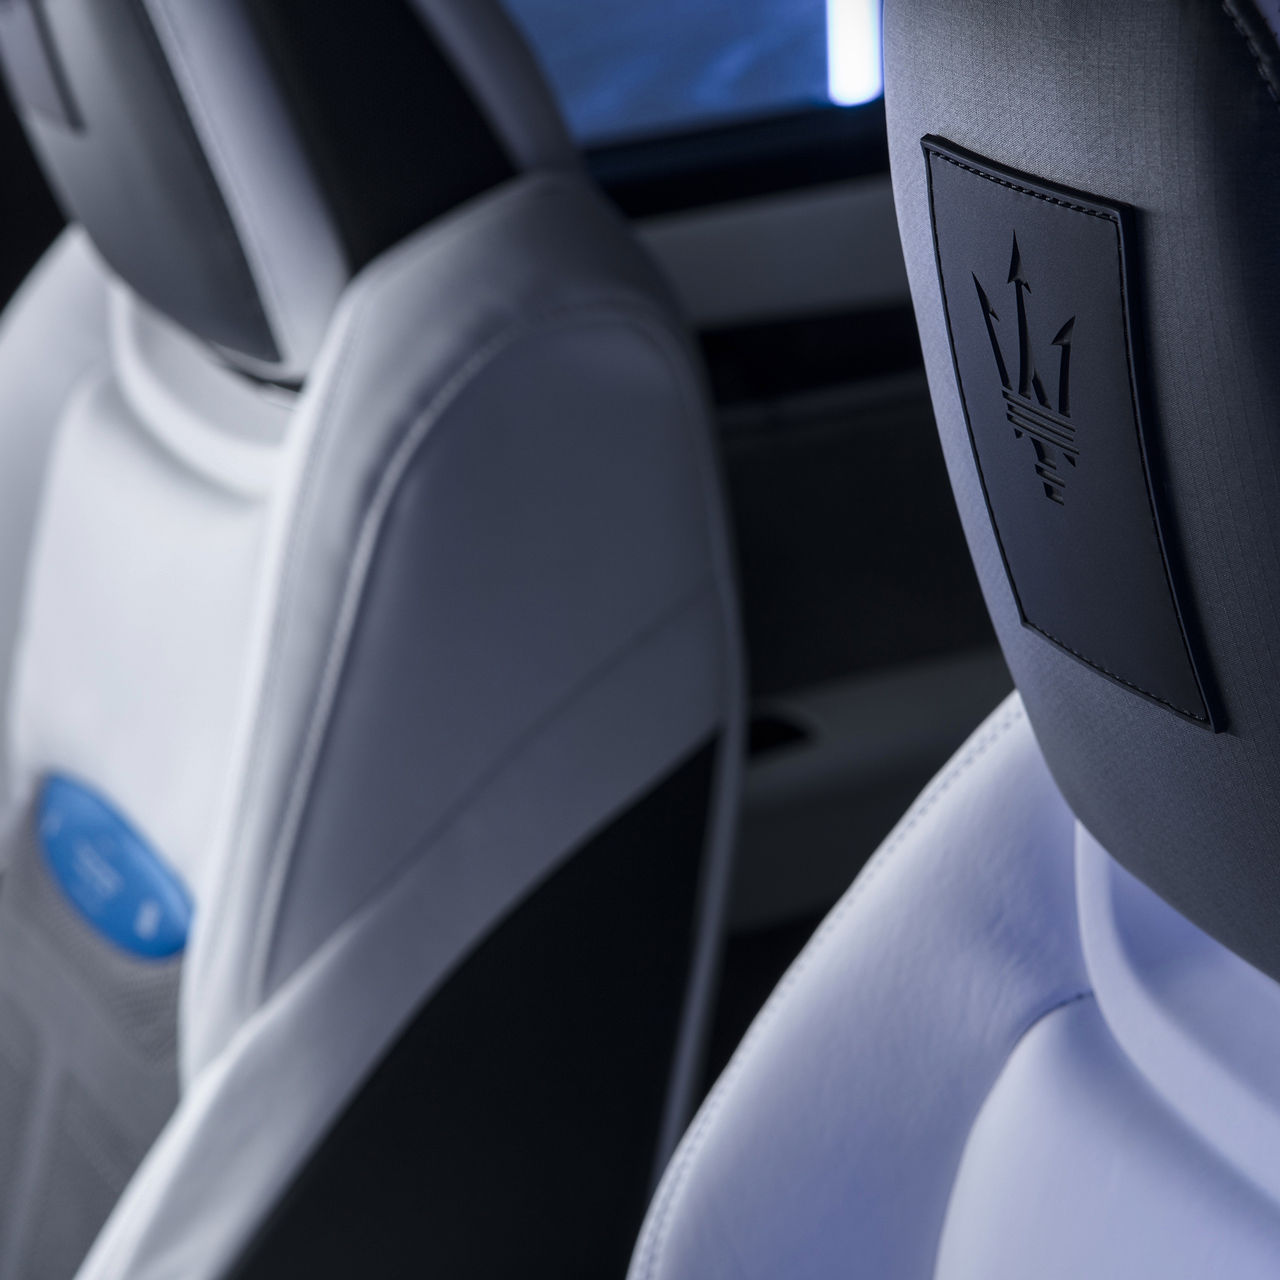 Detalle de los asientos del Maserati Fuoriserie Futura